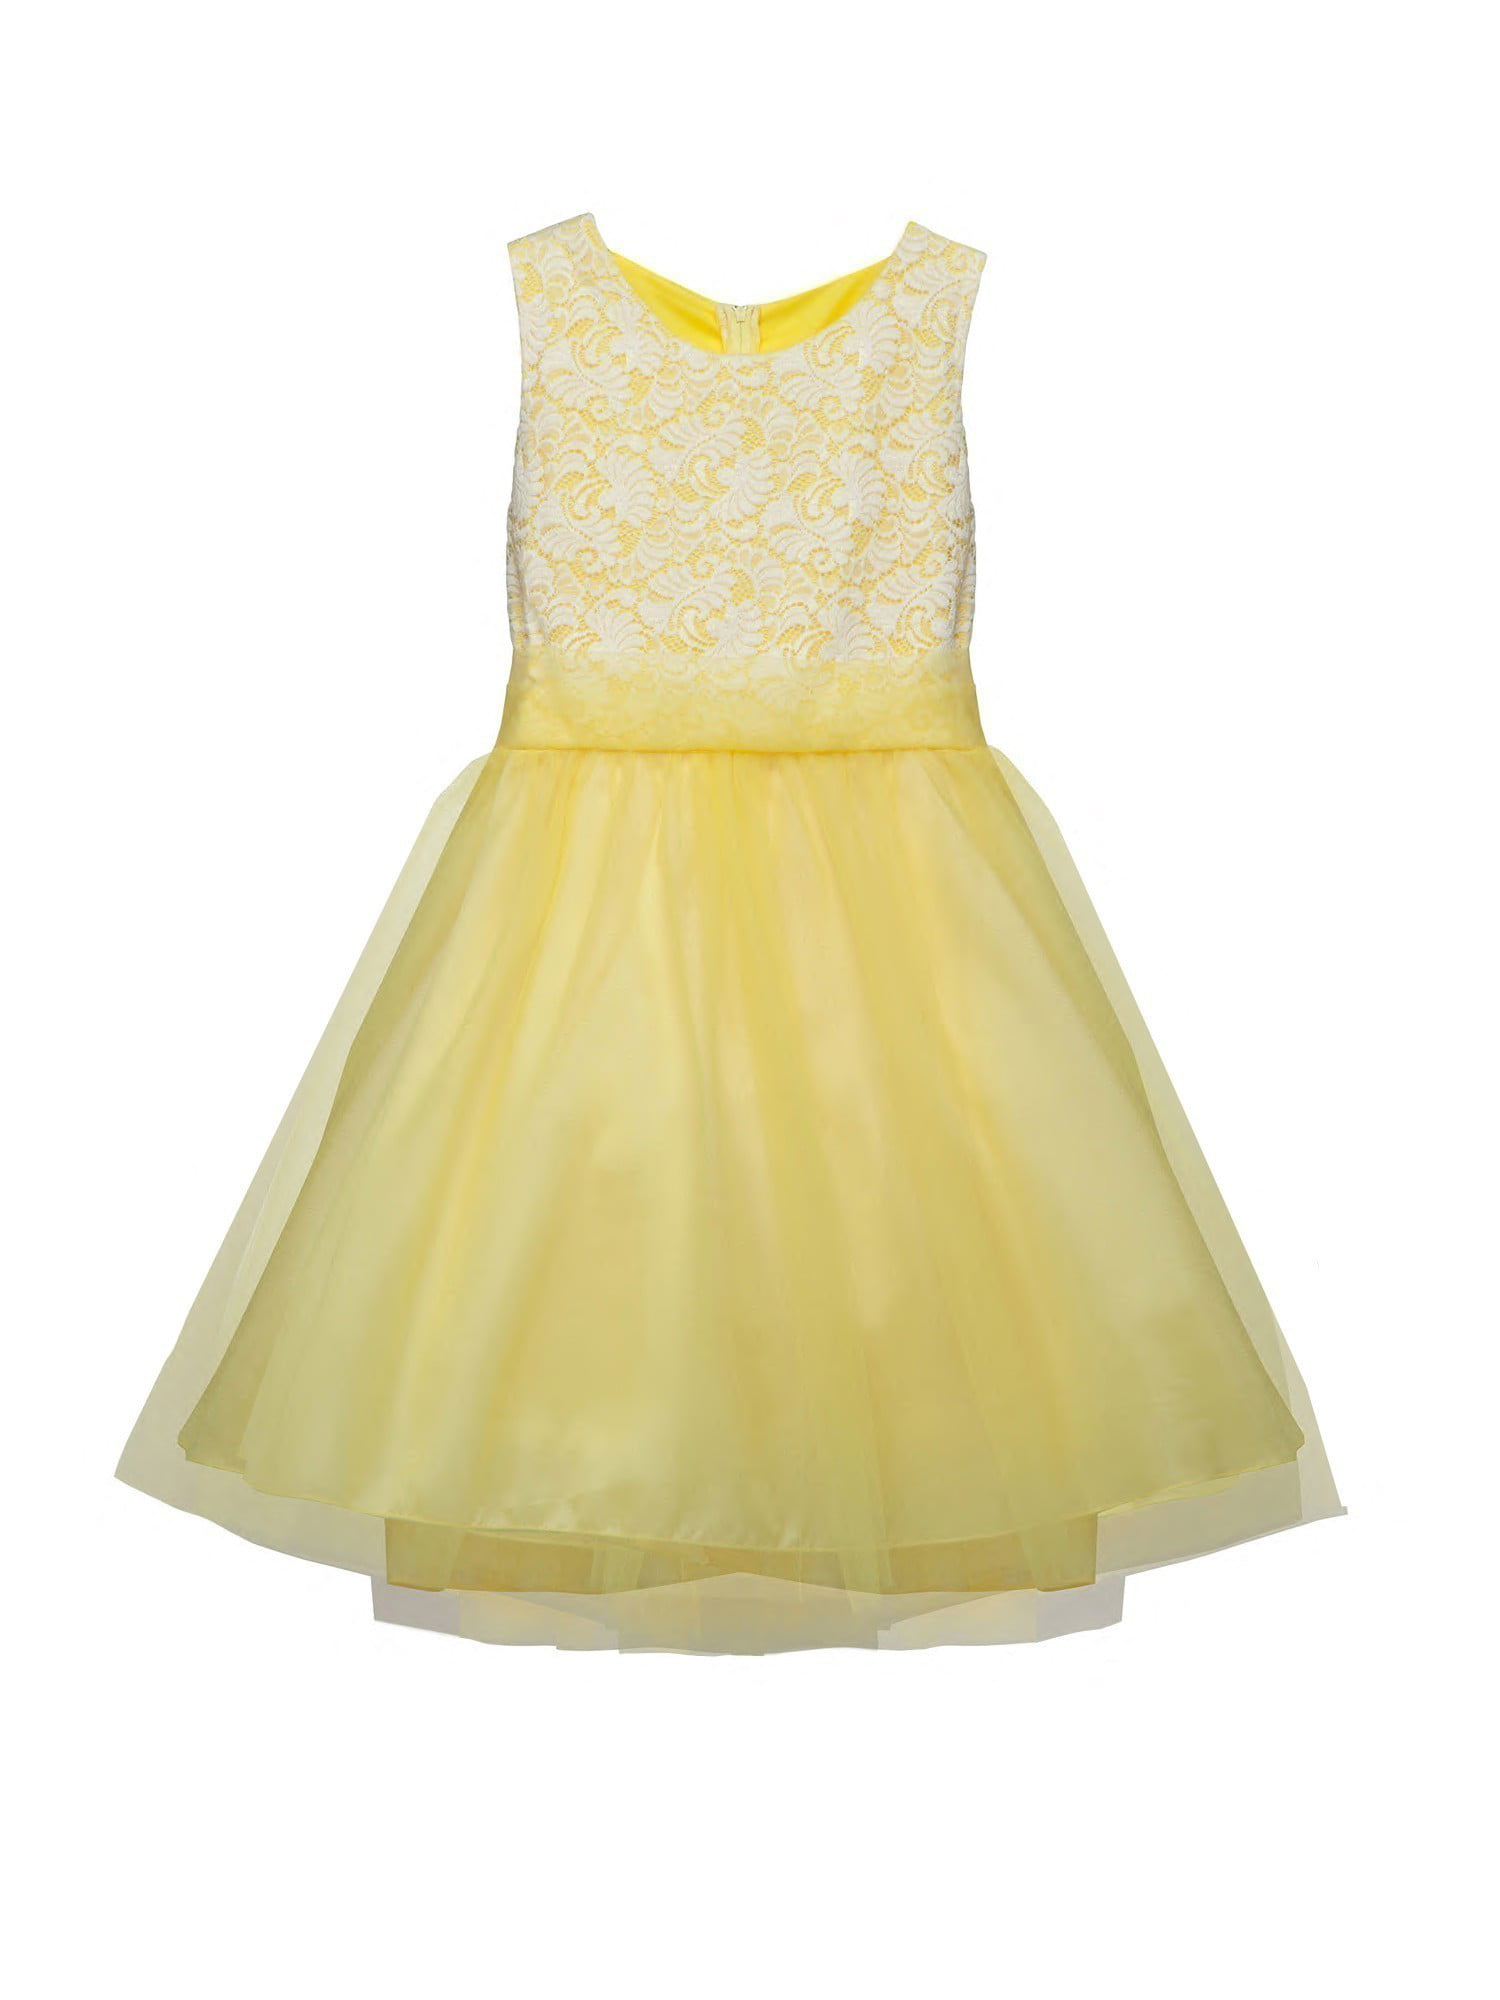 Kids Dream - Kids Dream Girls Yellow Lace Plus Size Junior Bridesmaid ...